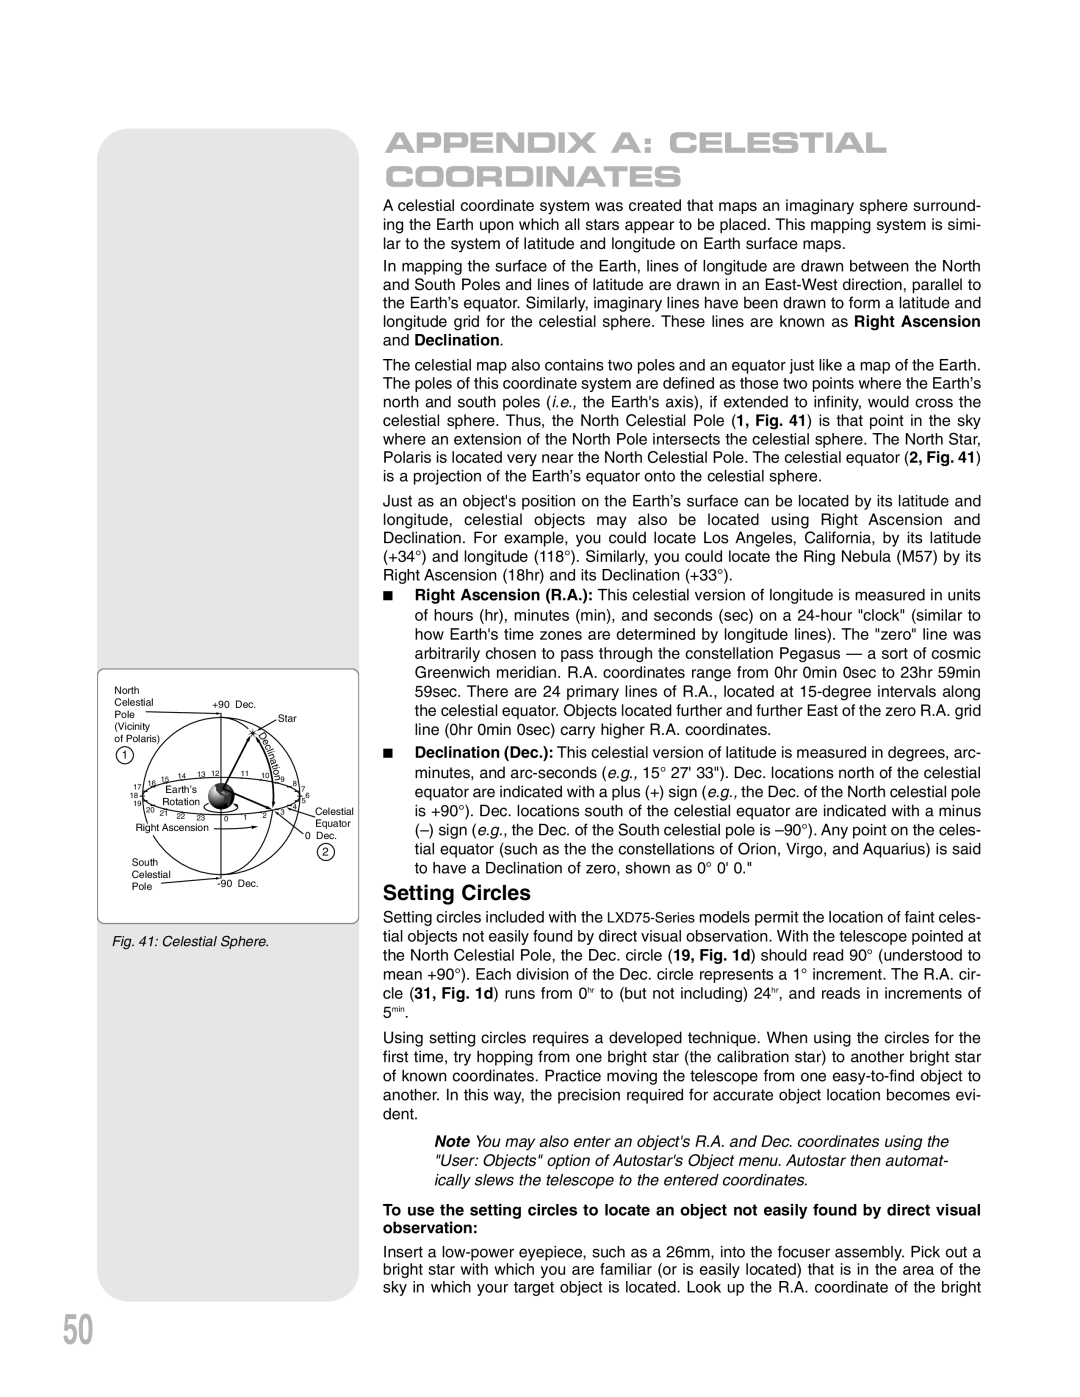 Meade LXD75 instruction manual Appendix A Celestial Coordinates, Setting Circles 